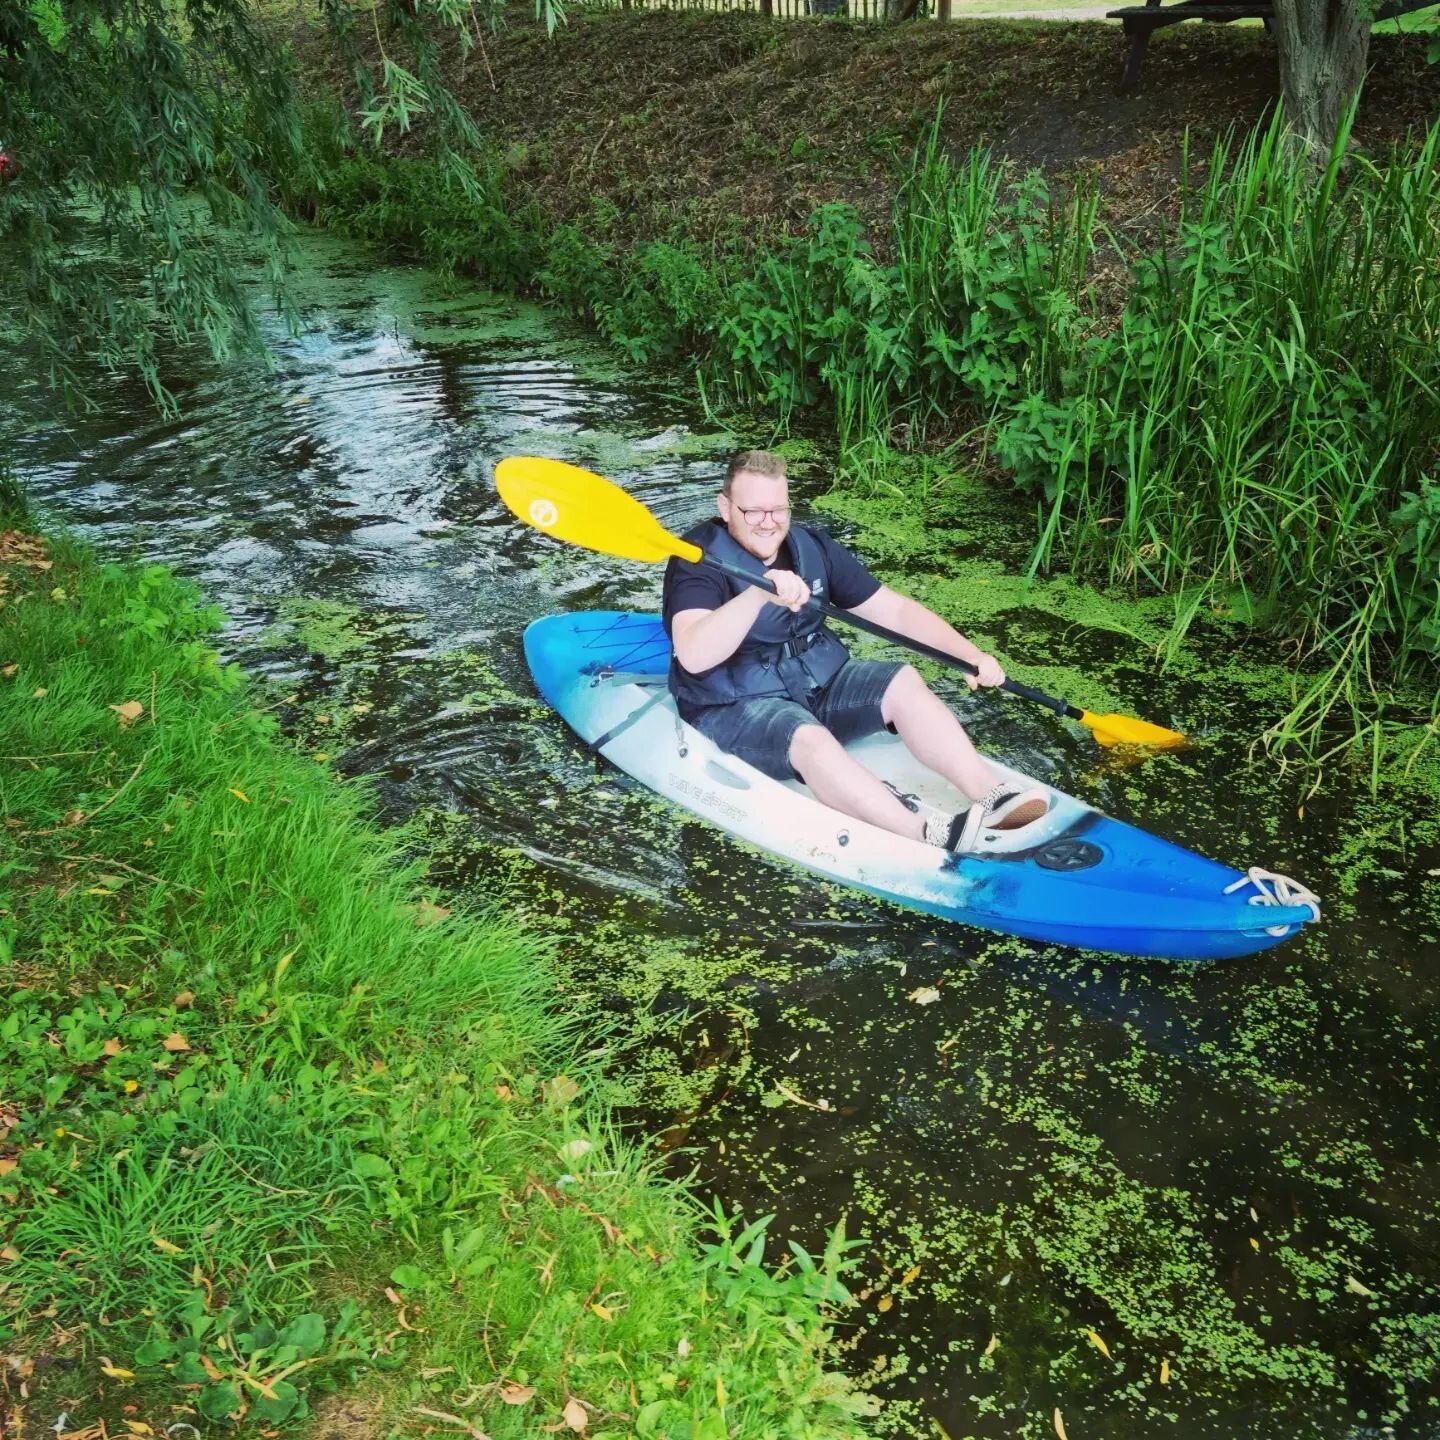 Off on an adventure 🛶🌳☀️

#riverstour 
#kayaking 
#sudburysuffolk 
#suffolk 
#Essex 
#summer